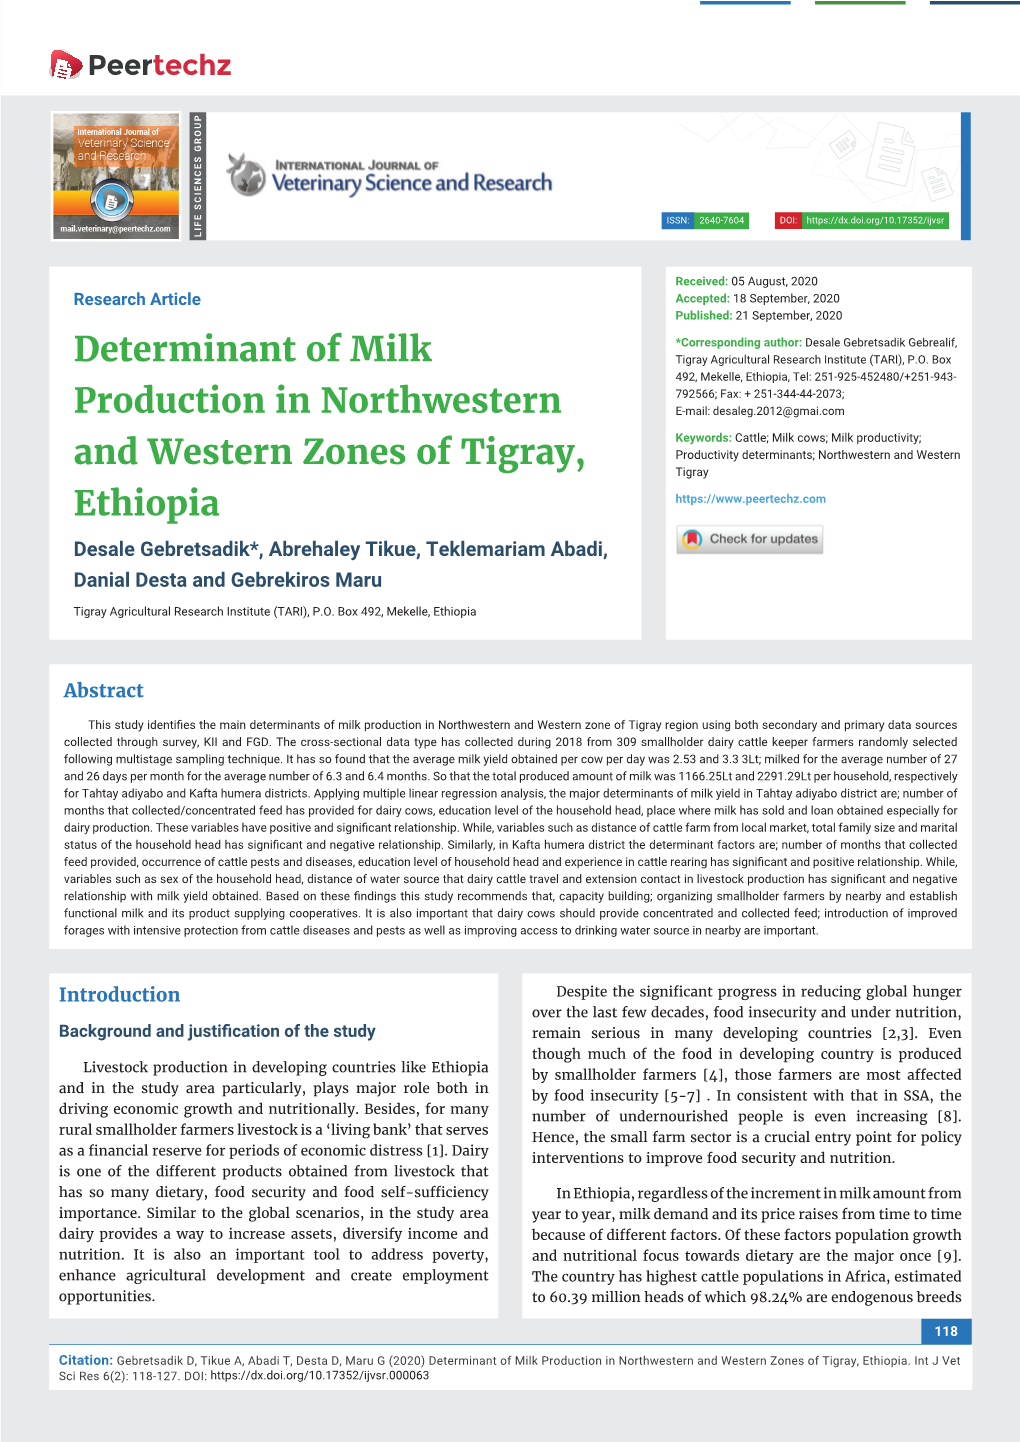 Determinant of Milk Production in Northwestern and Western Zones of Tigray, Ethiopia